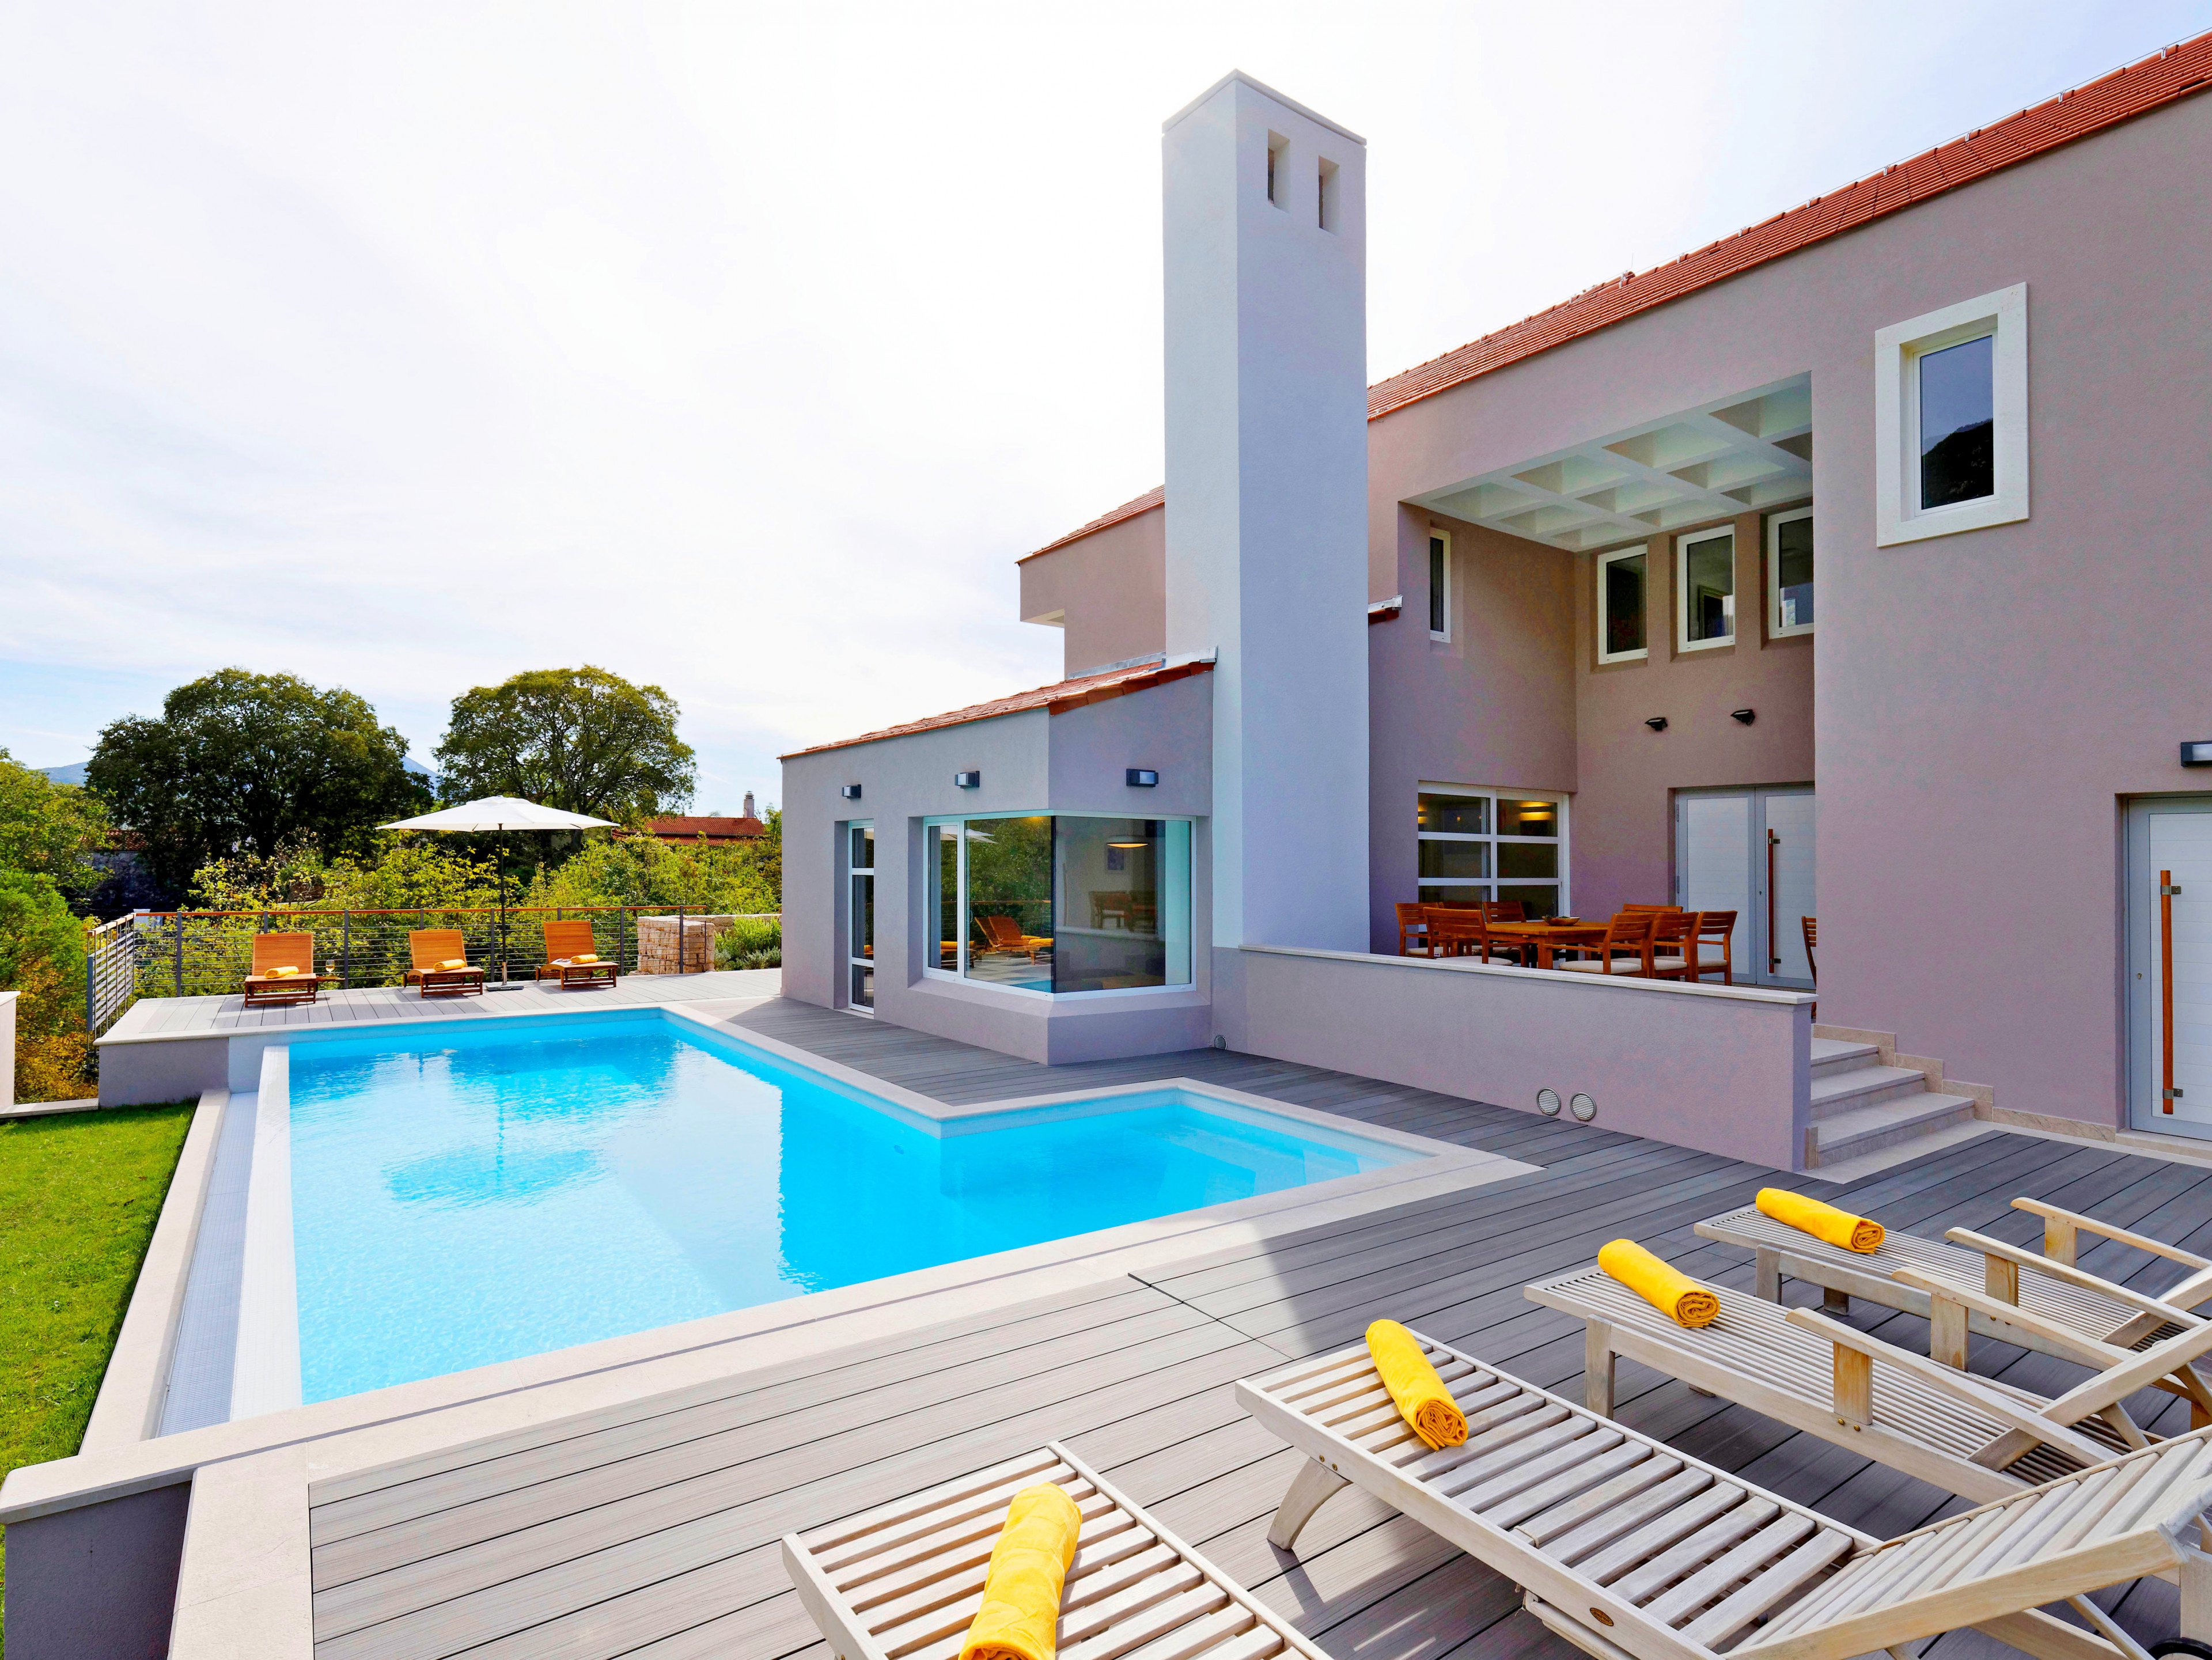 Villa Jure private villas in Croatia with pools